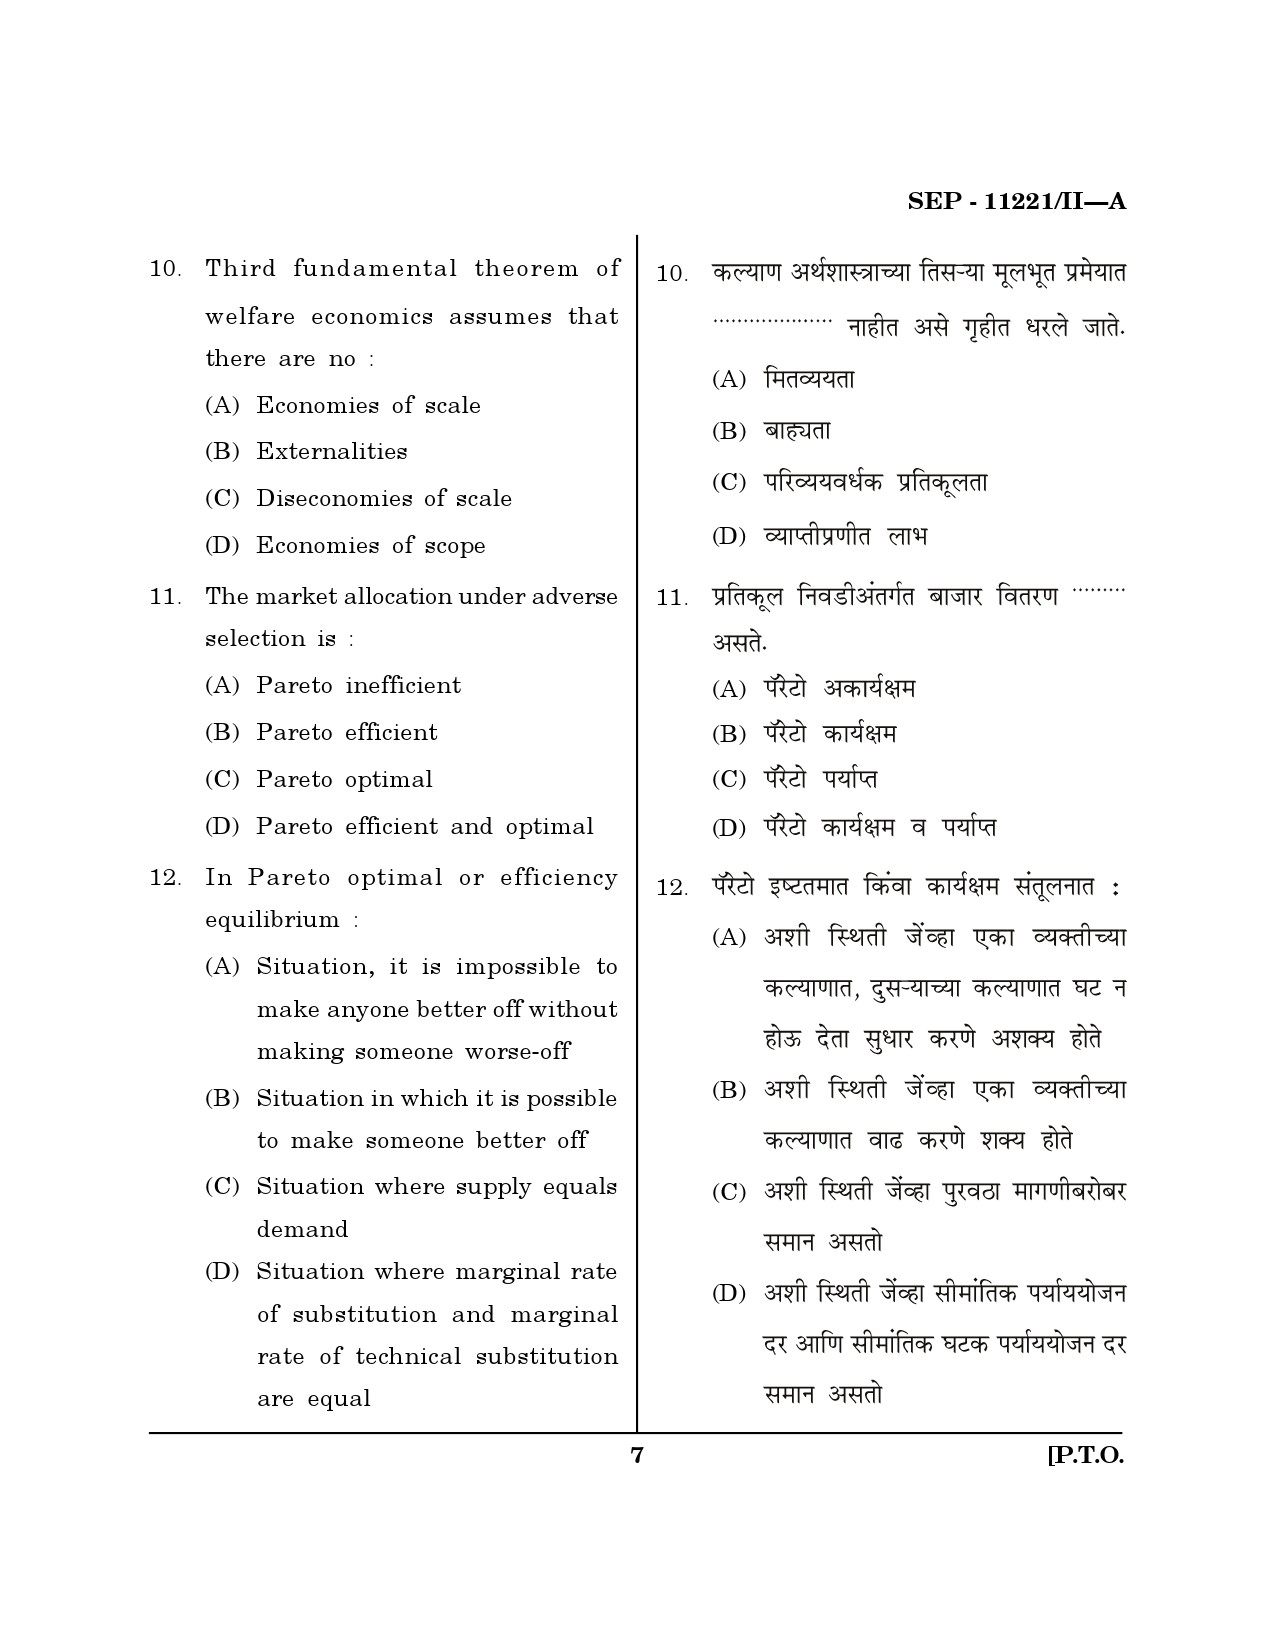 Maharashtra SET Economics Exam Question Paper September 2021 6